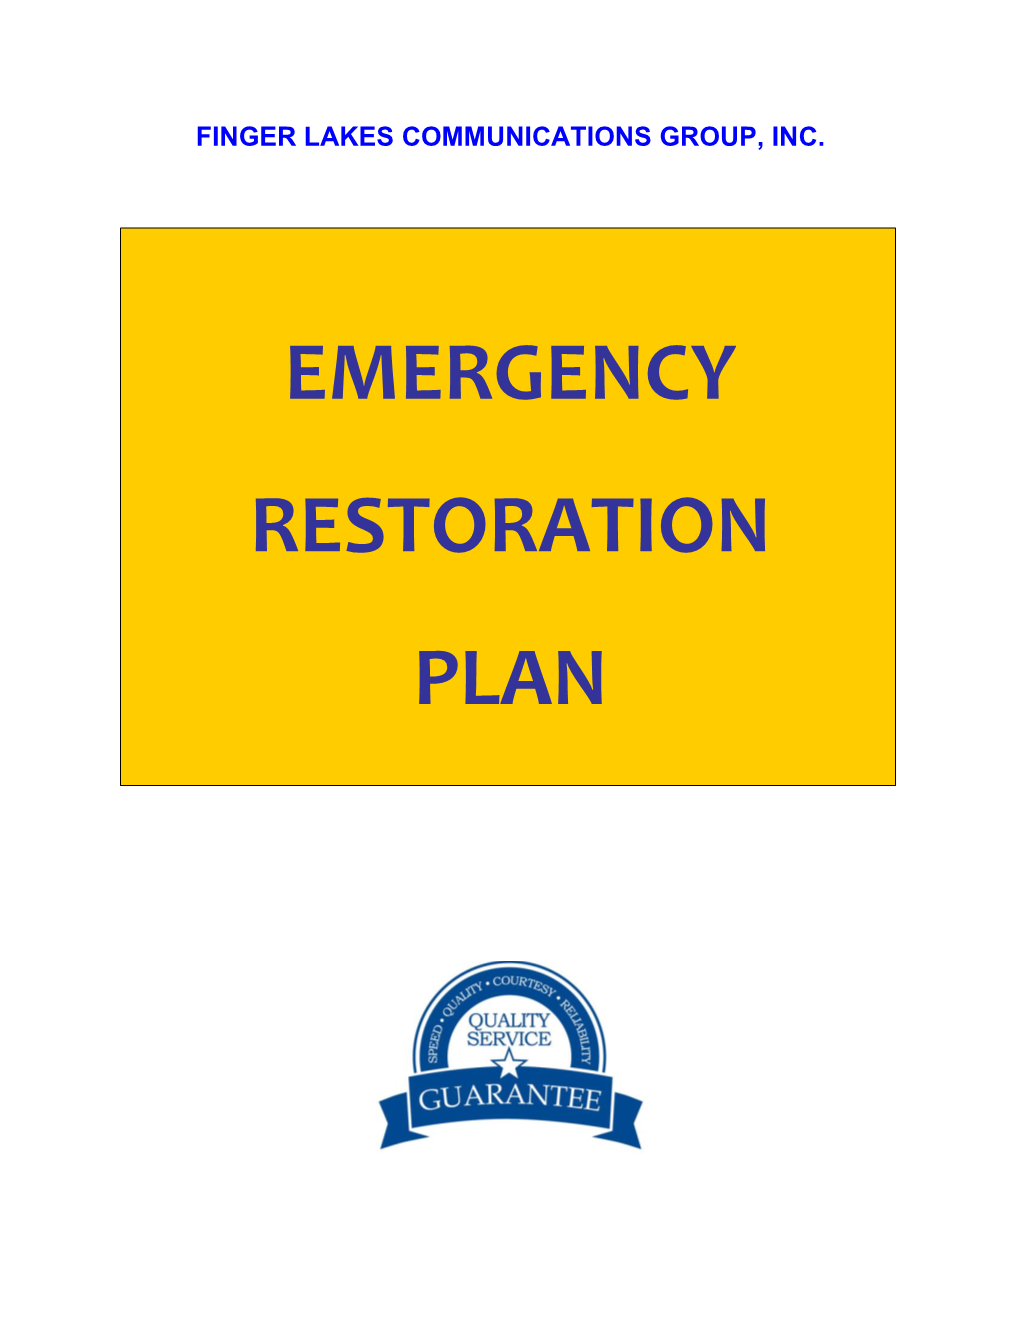 Emergency Restoration Plan